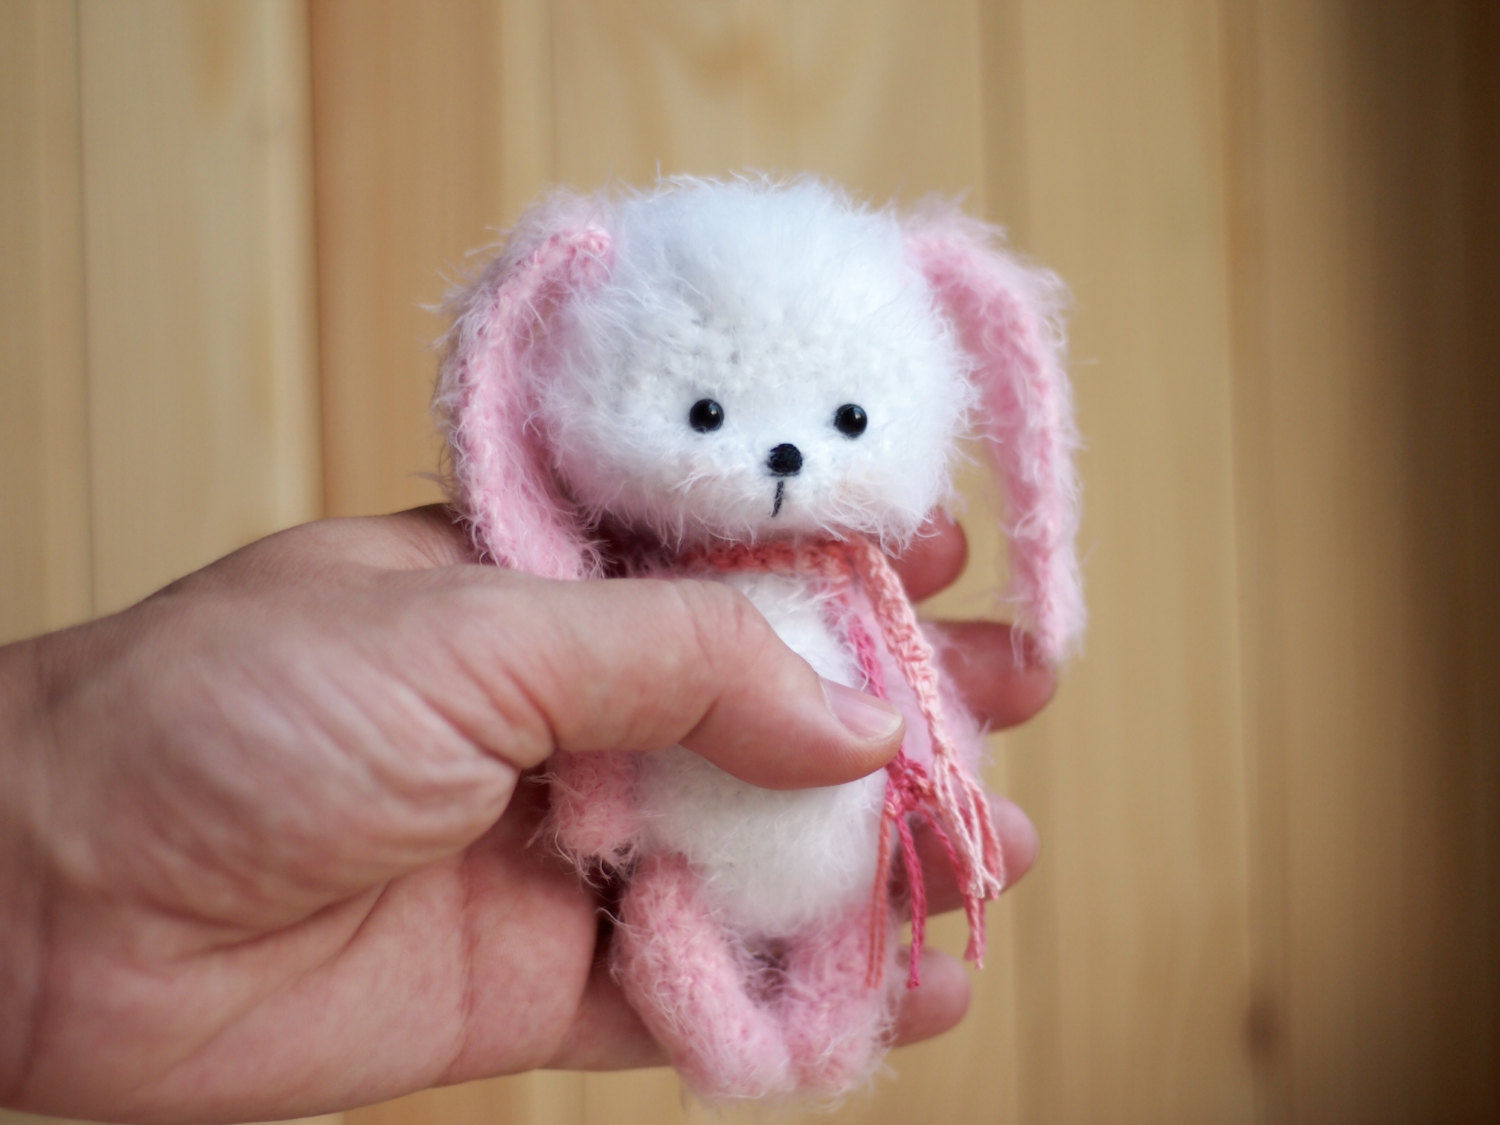 Ooak Artist crochet bunny handmade kawaii teddy bear toy gift present for her